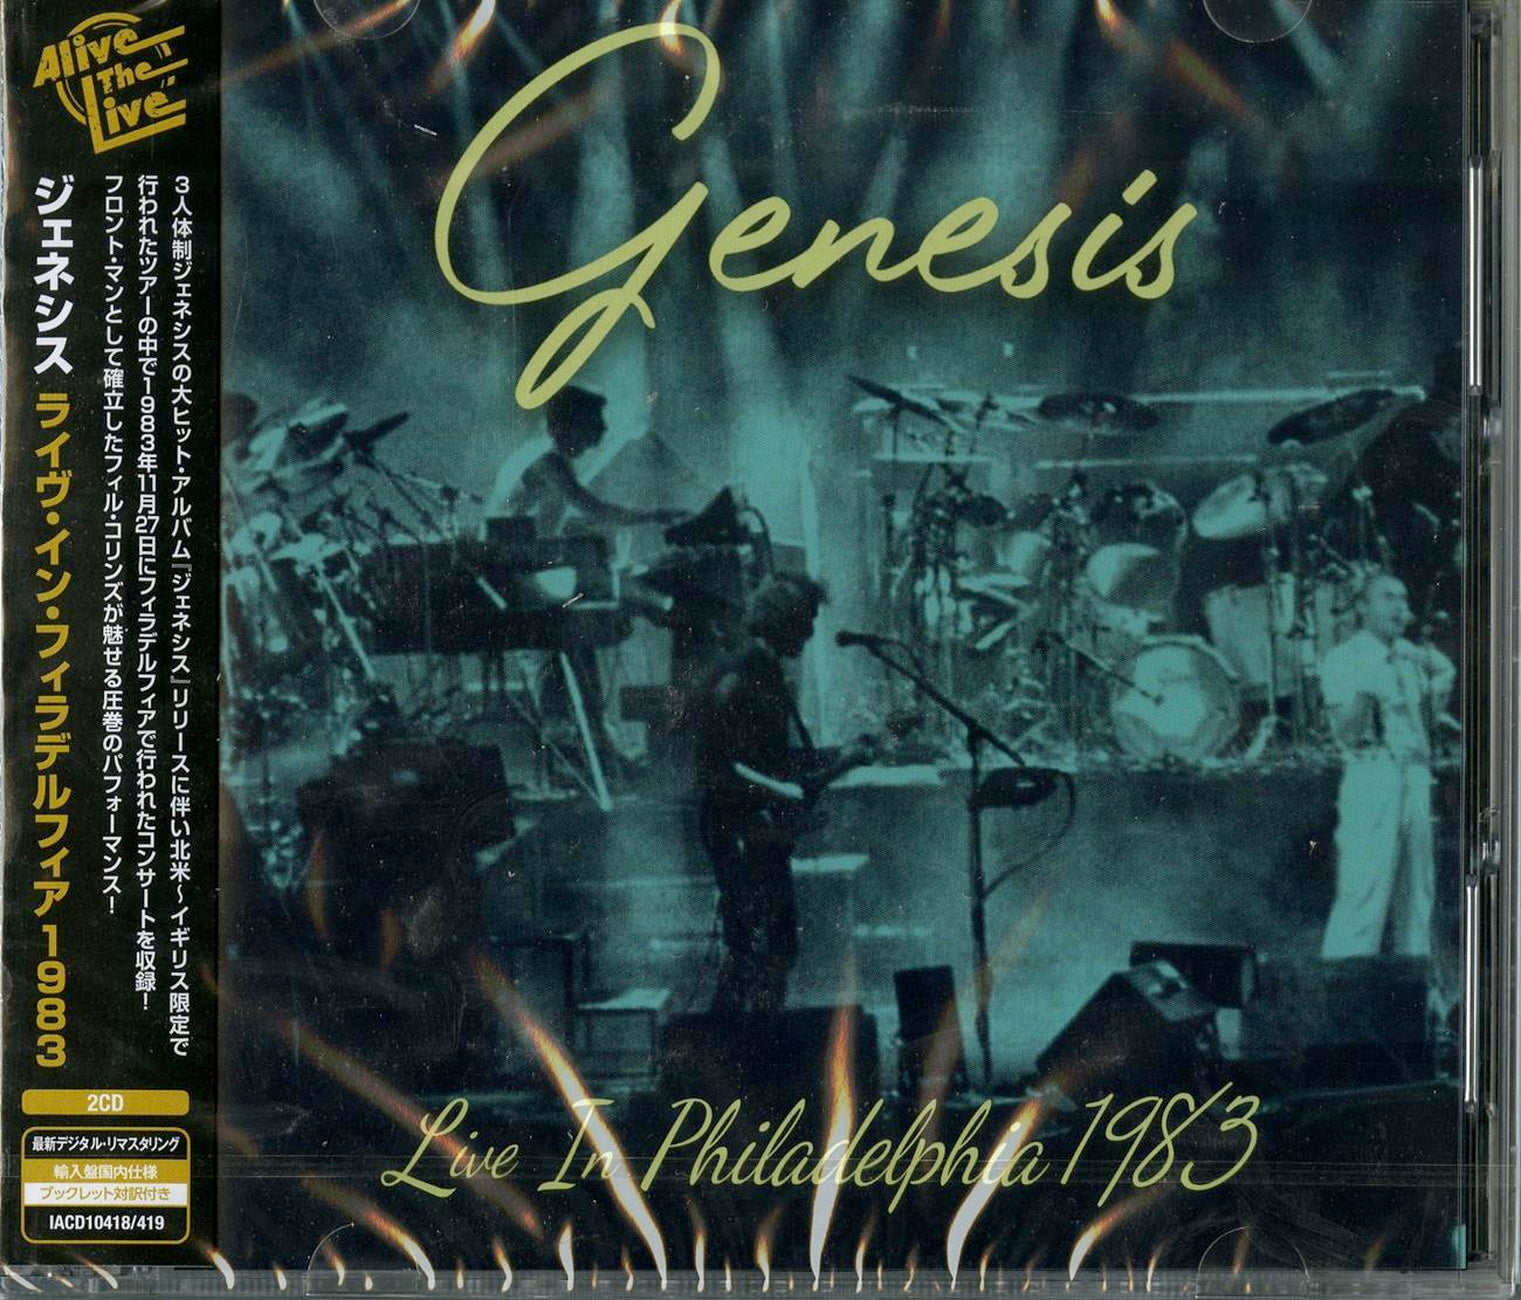 Genesis - Live In Philadelphia 1983 - Import 2 CD Bonus Track – CDs Vinyl  Japan Store